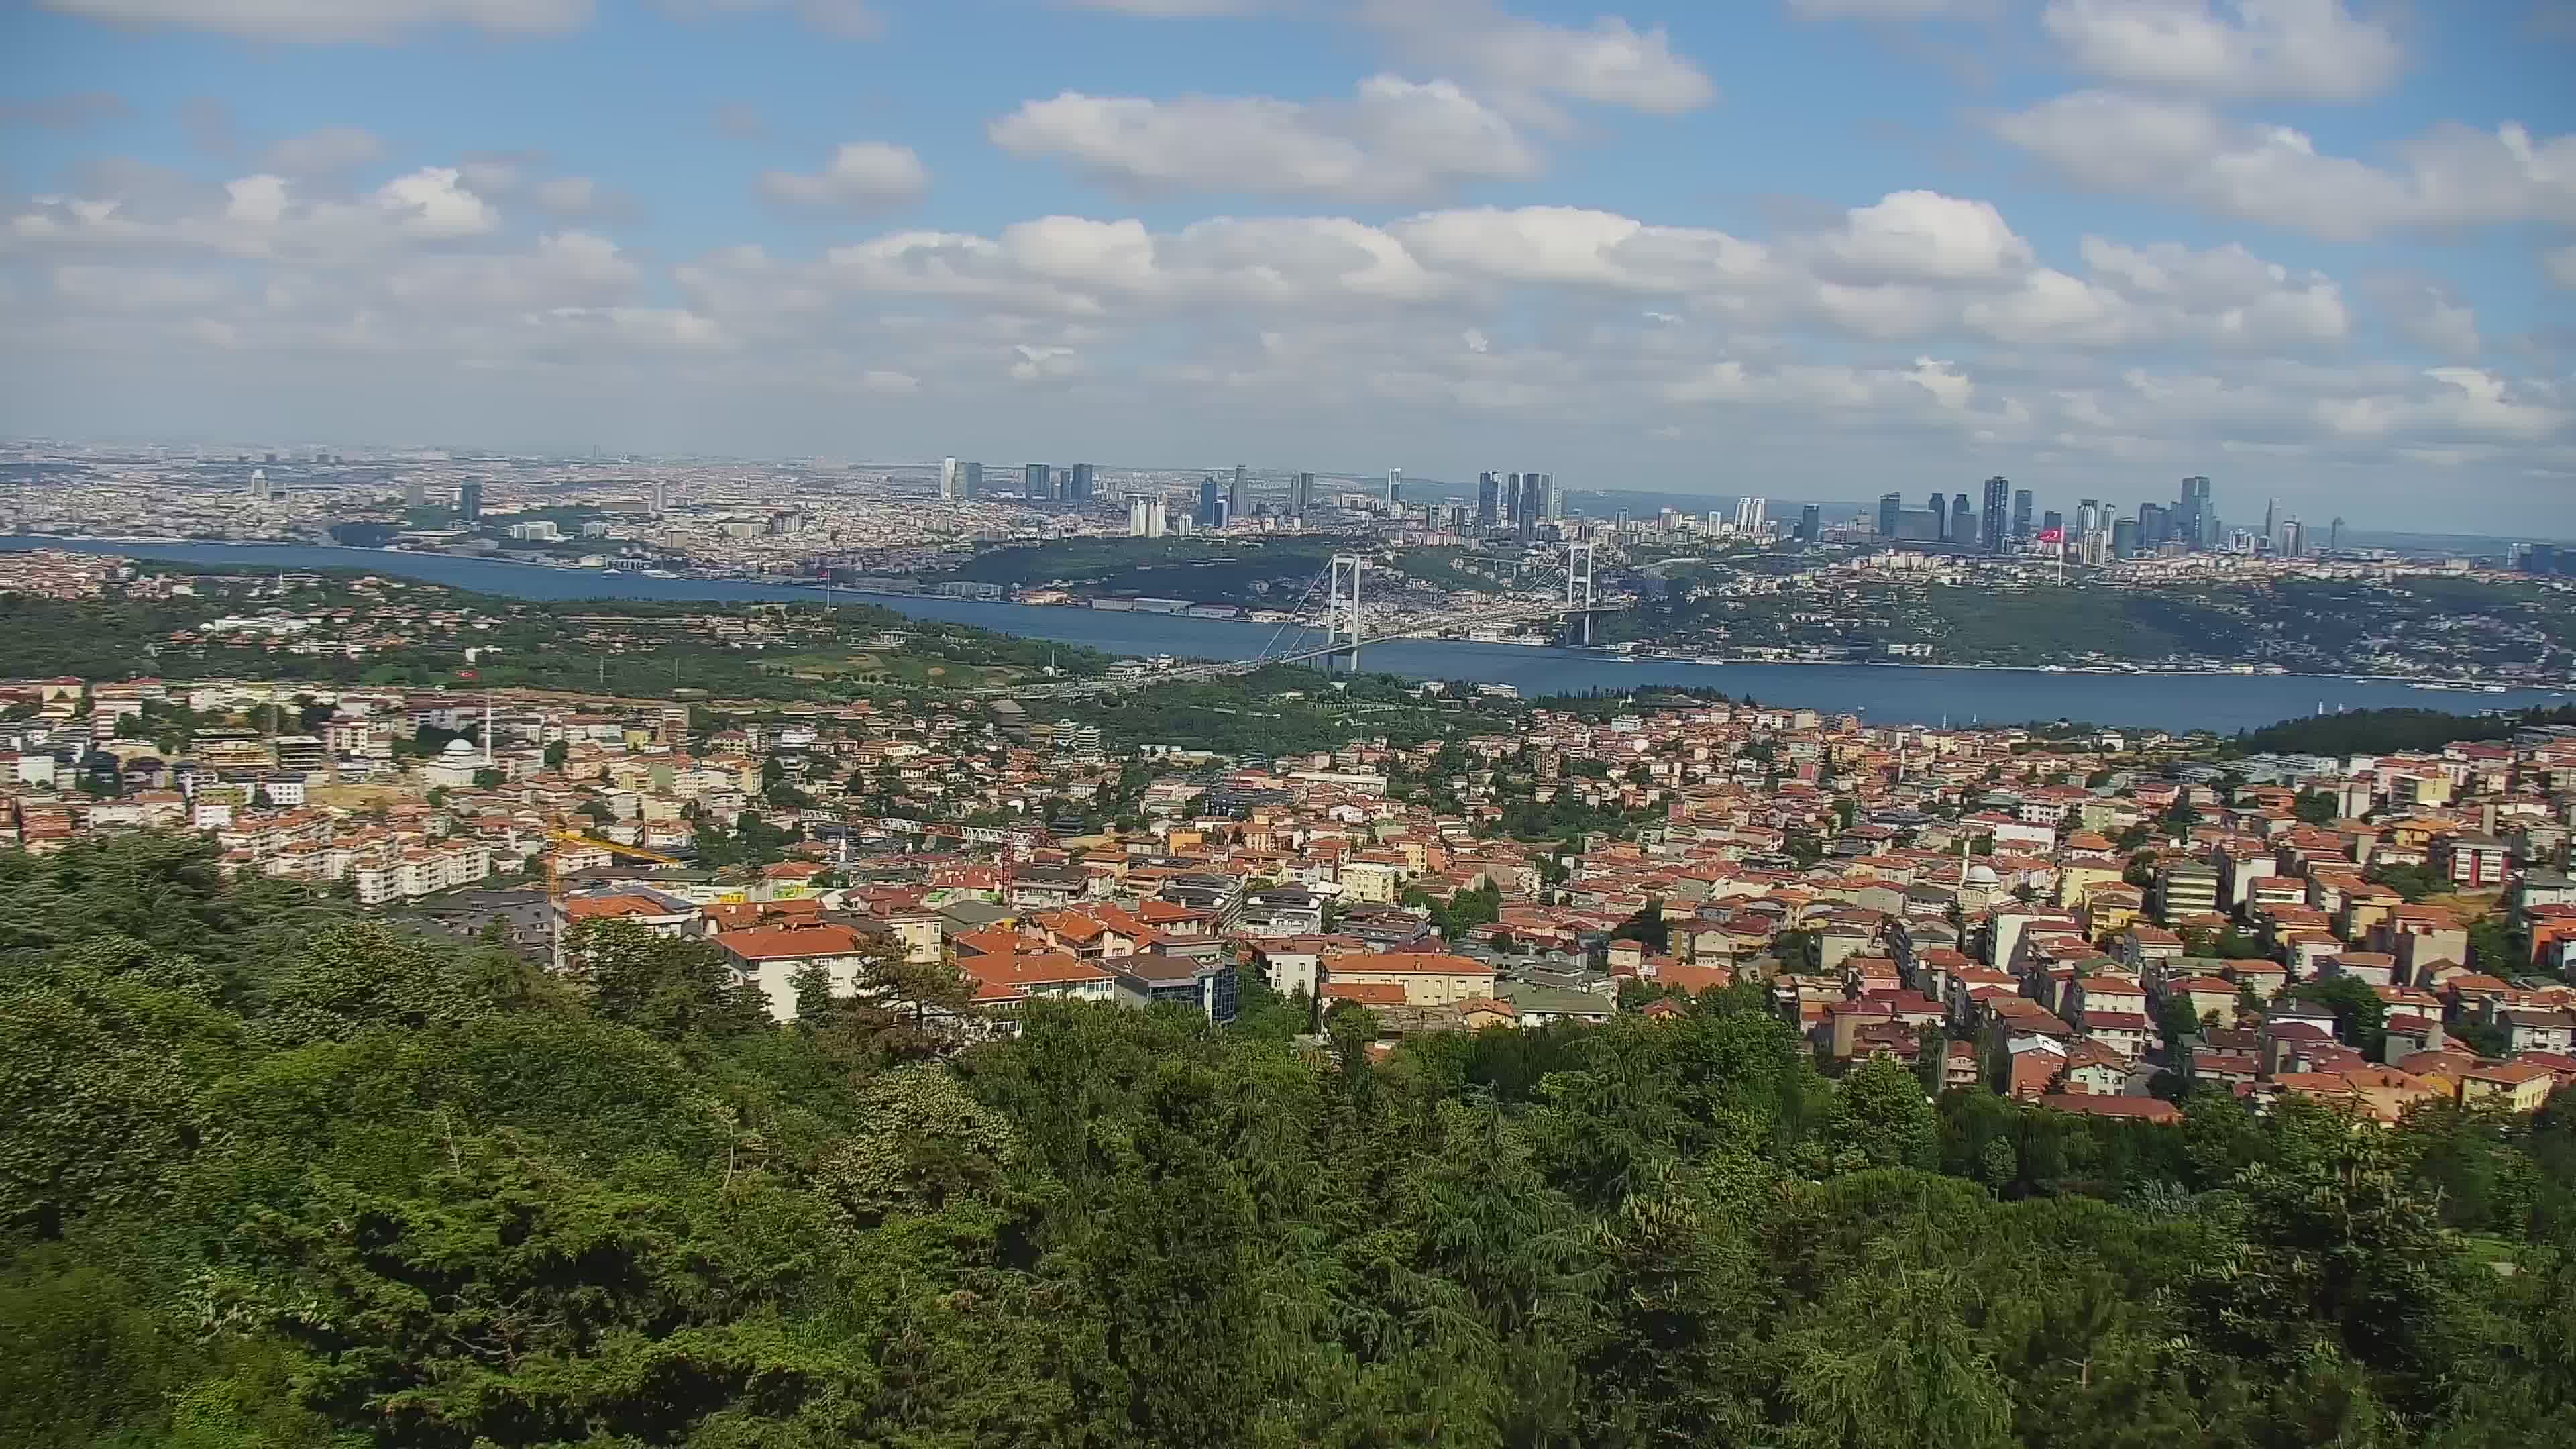 Istanbul So. 10:28